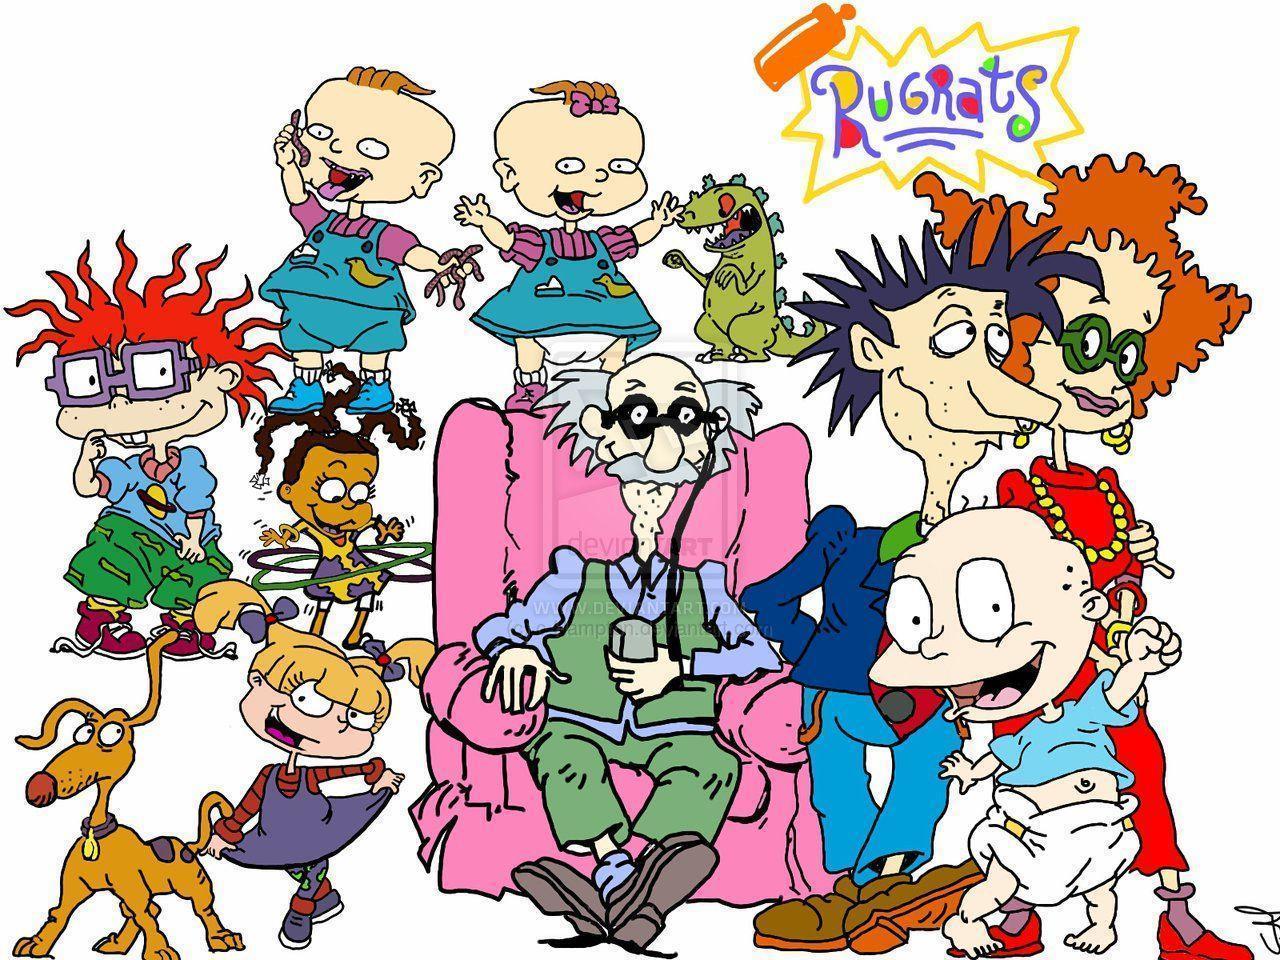 best image about Rugrats. Rugrats, Pickles